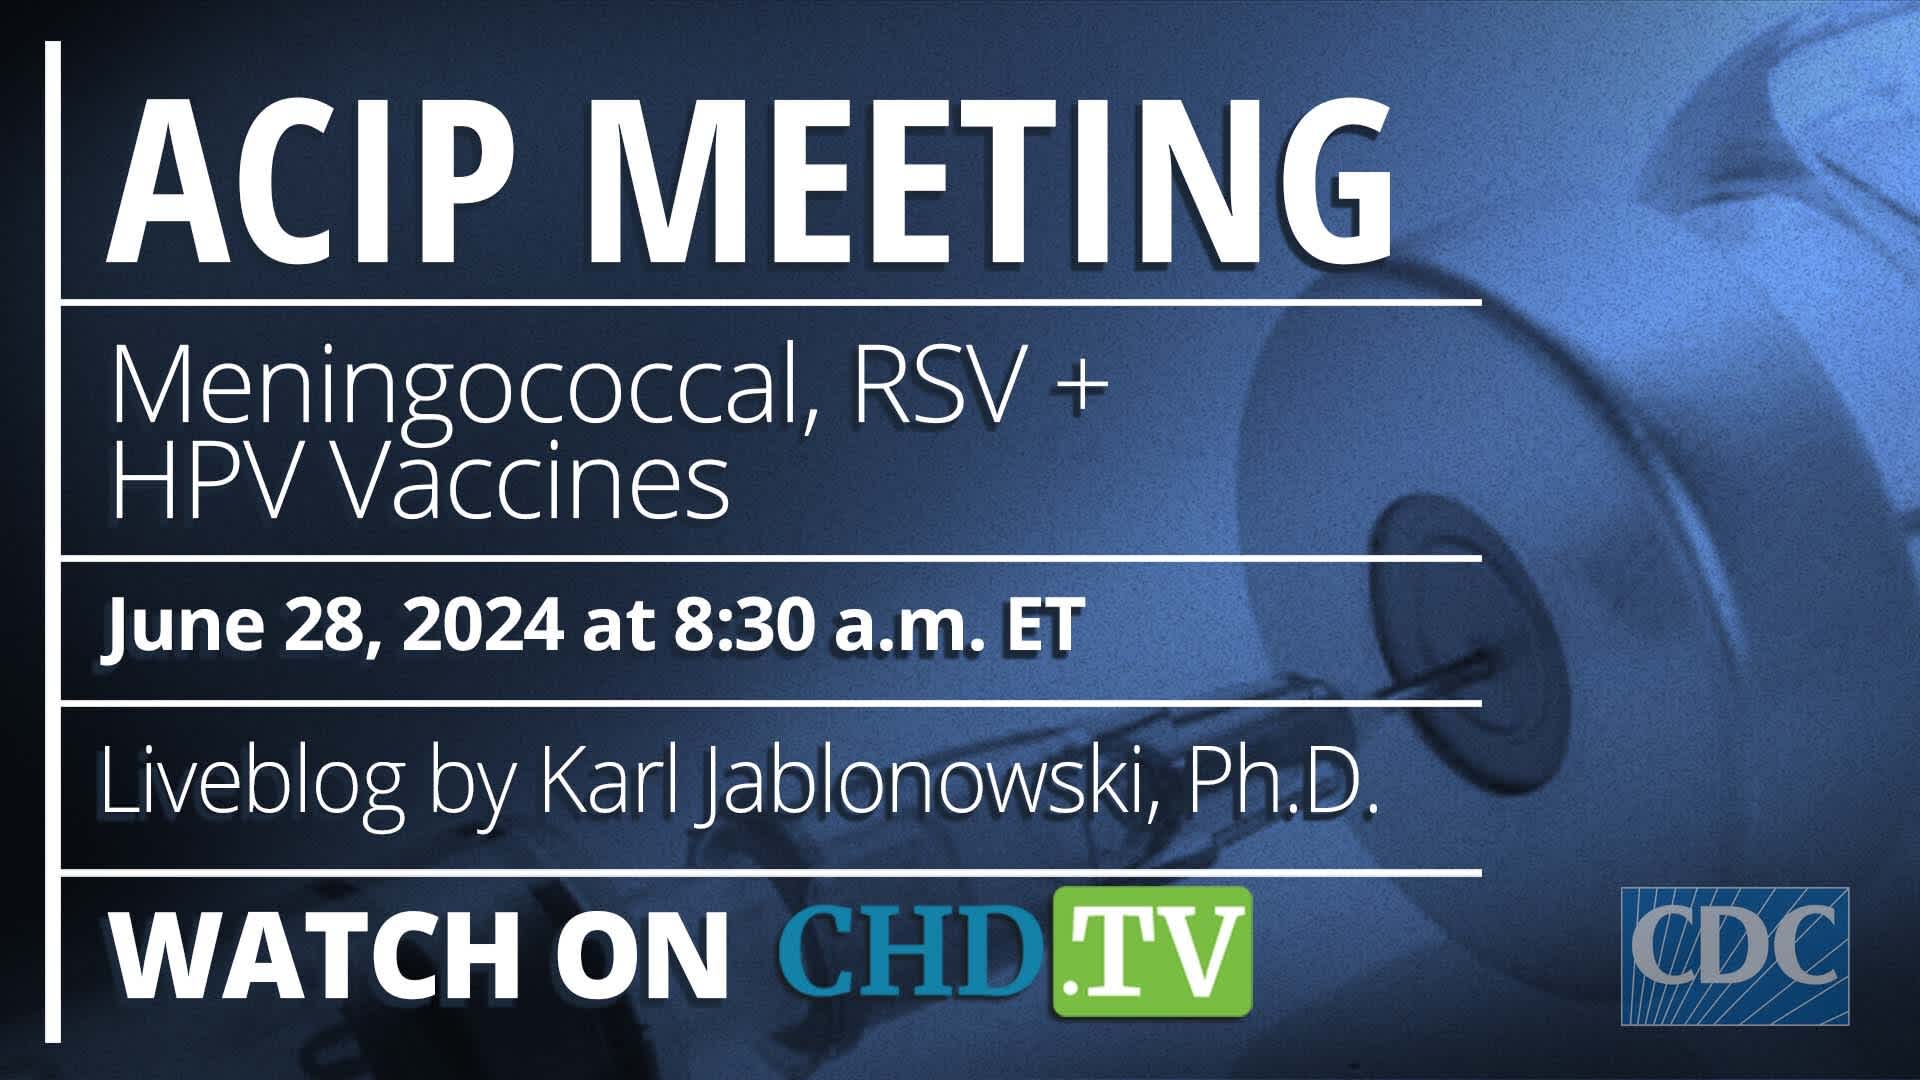 CDC ACIP Meeting: Meningococcal, RSV + HPV Vaccines | June 28